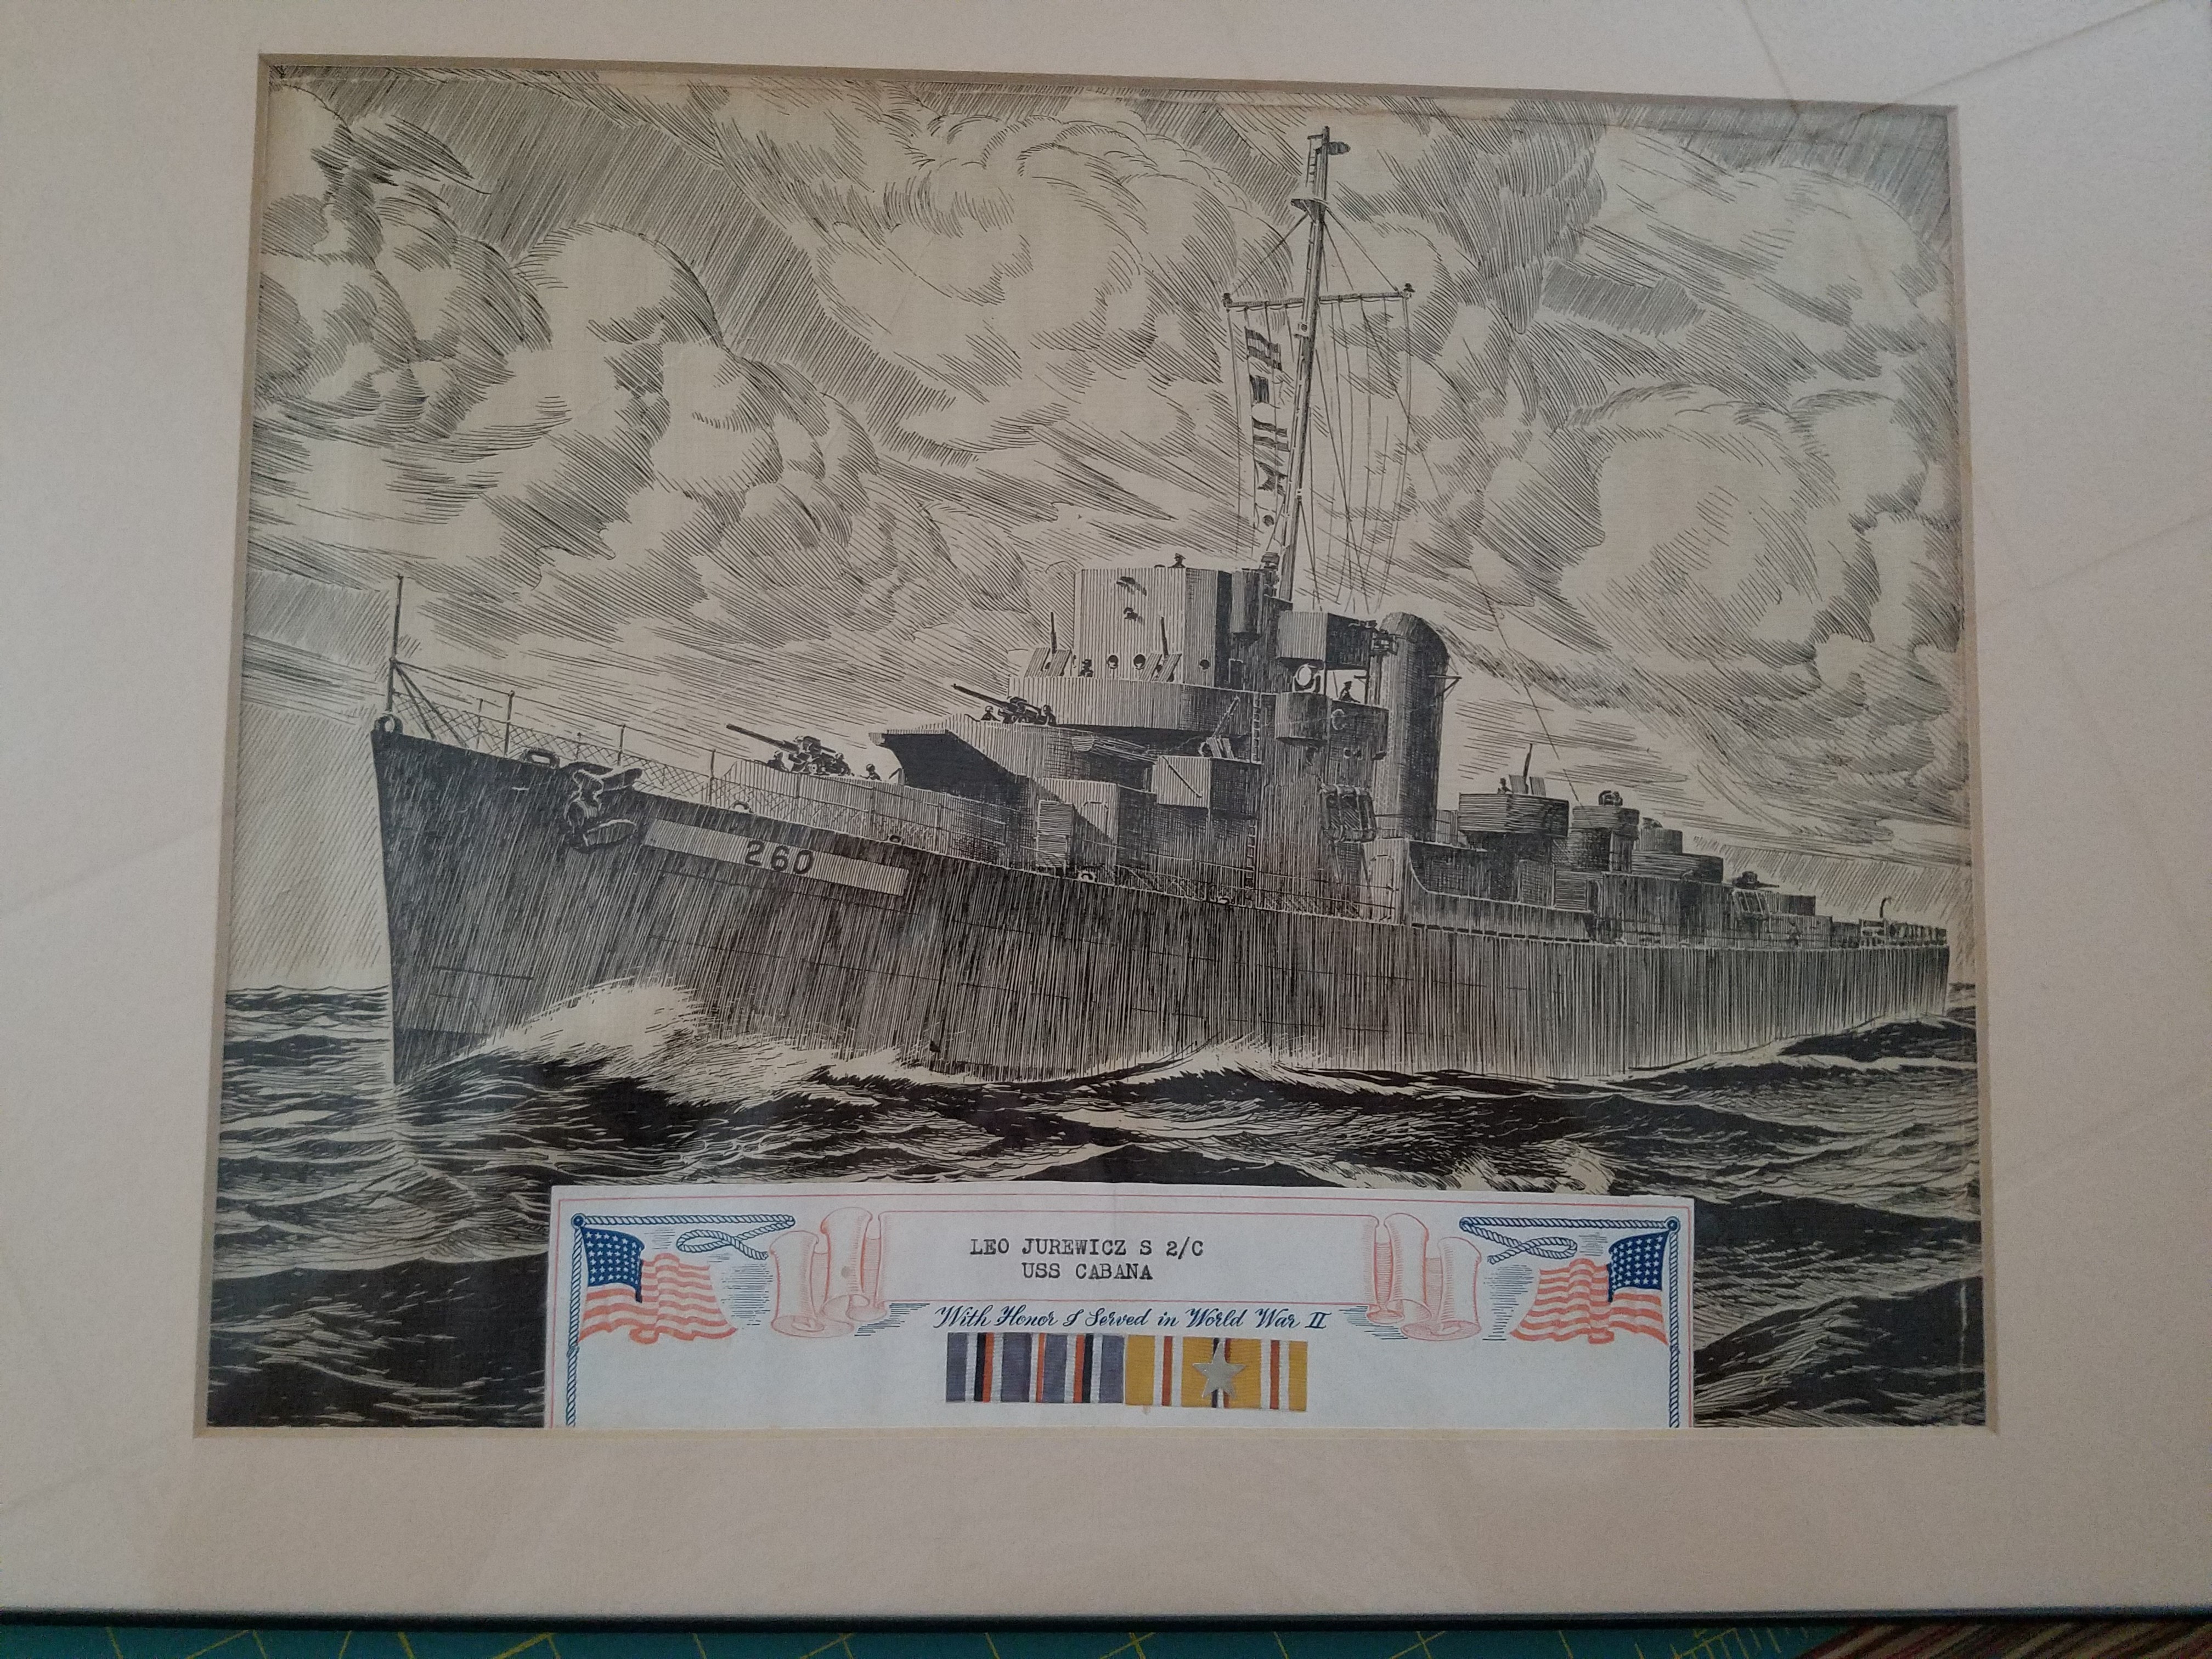 USS Cabana (DE-260